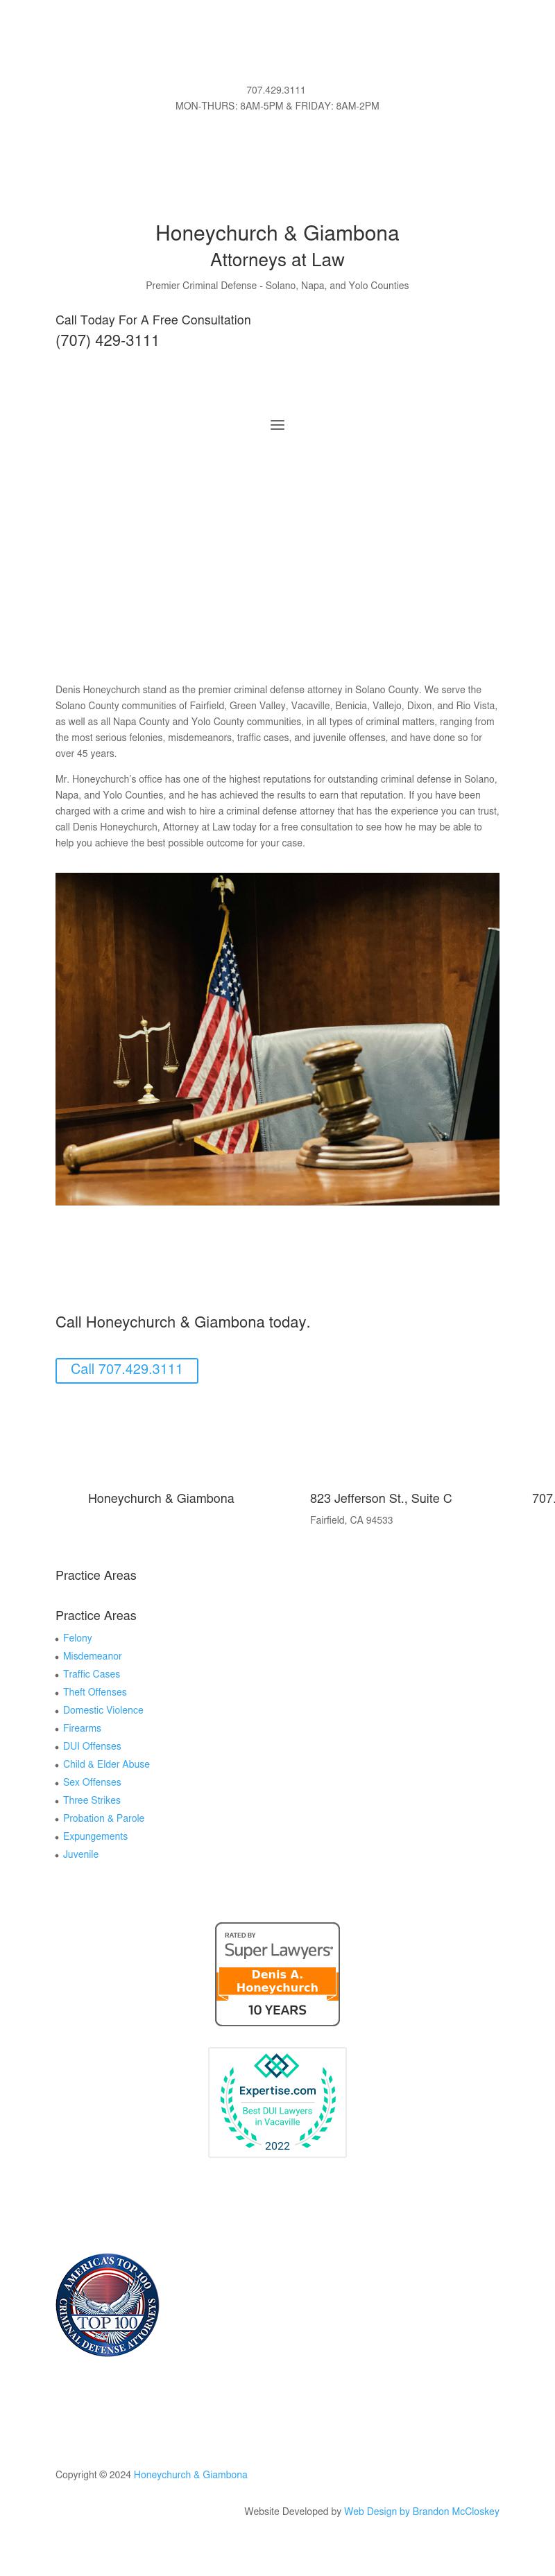 Honeychurch Criminal Law - Fairfield CA Lawyers